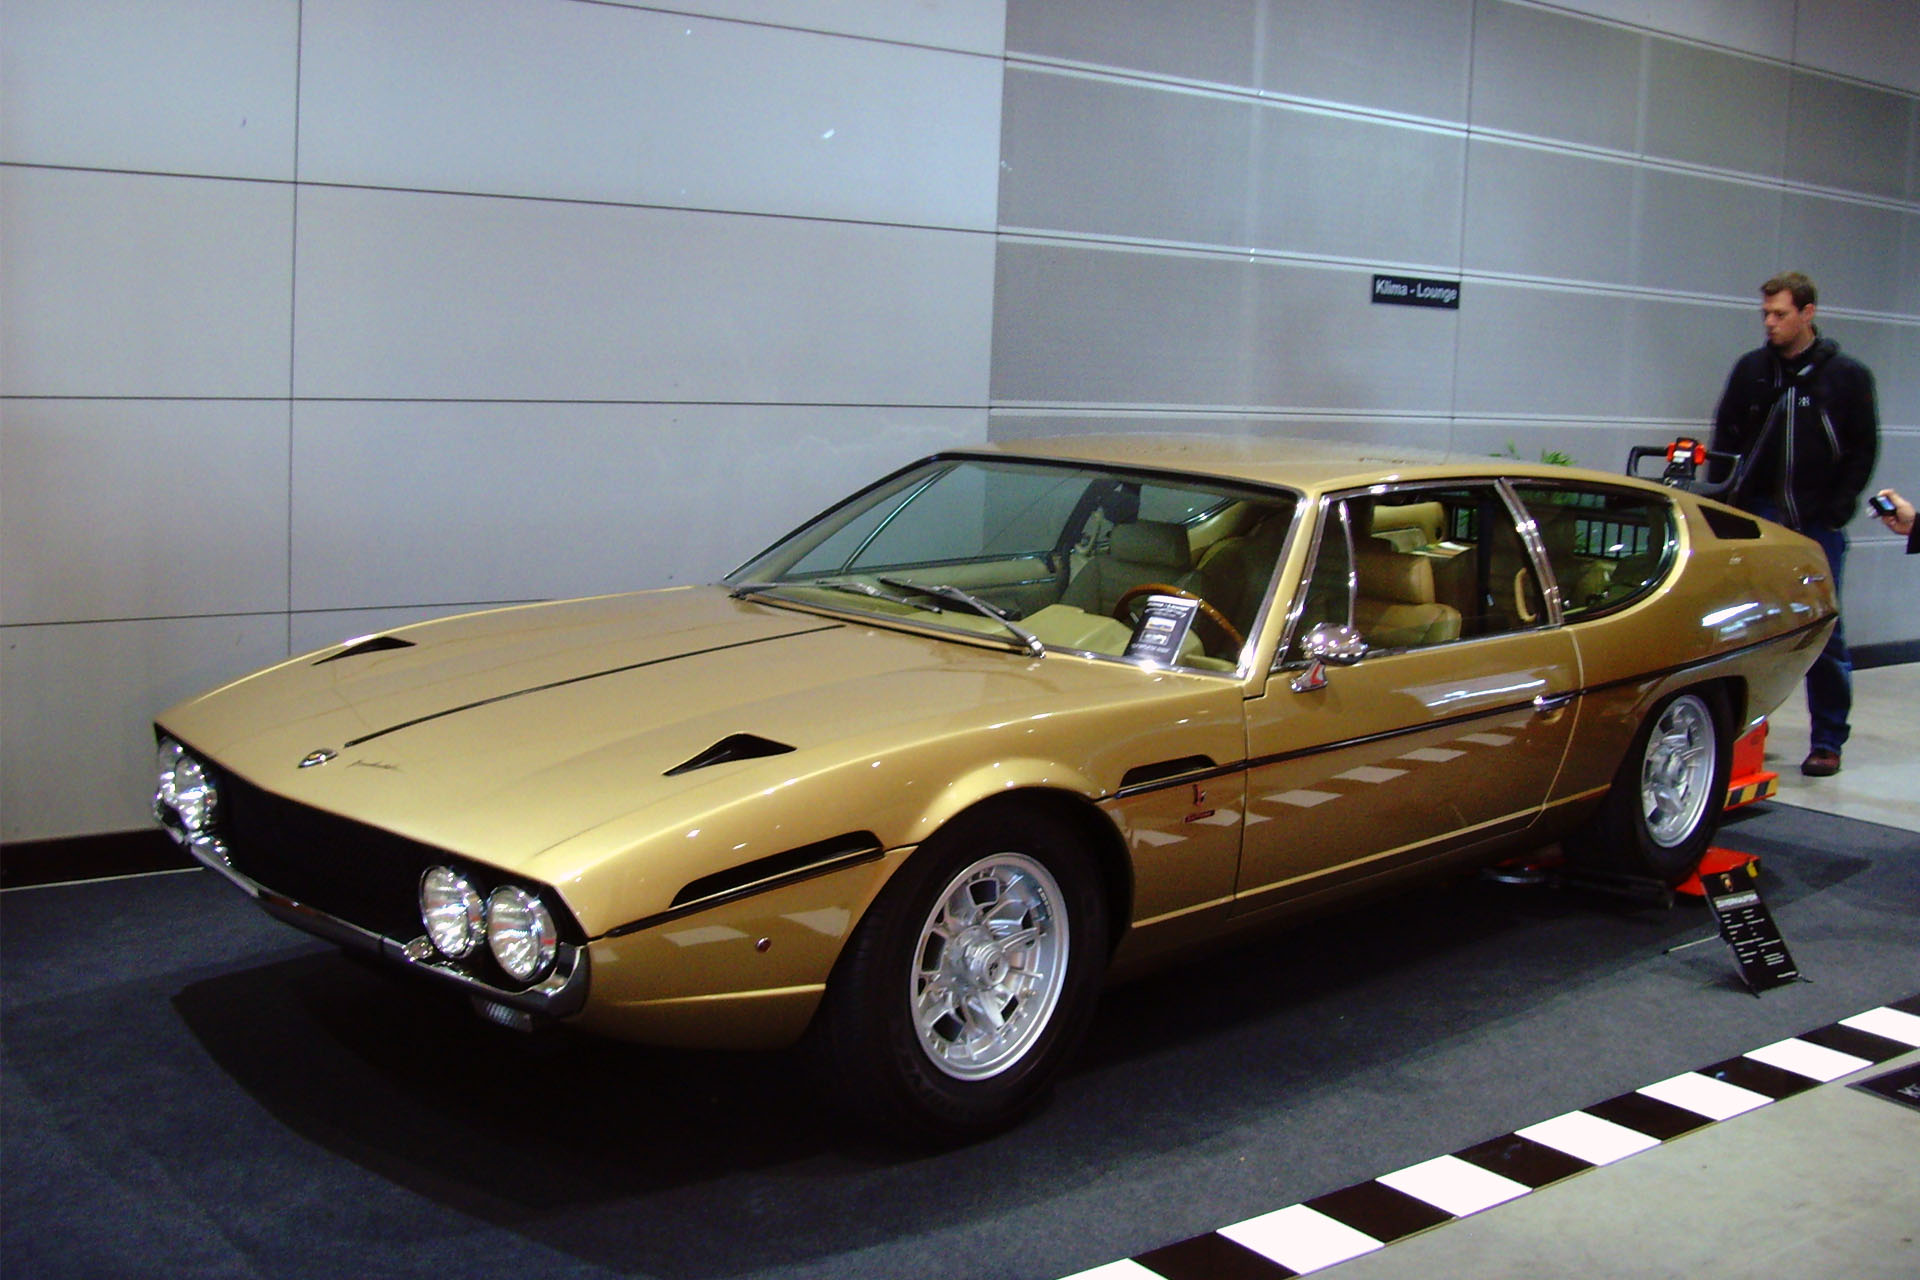 Lamborghini-Espada in gold at an indoor car show.